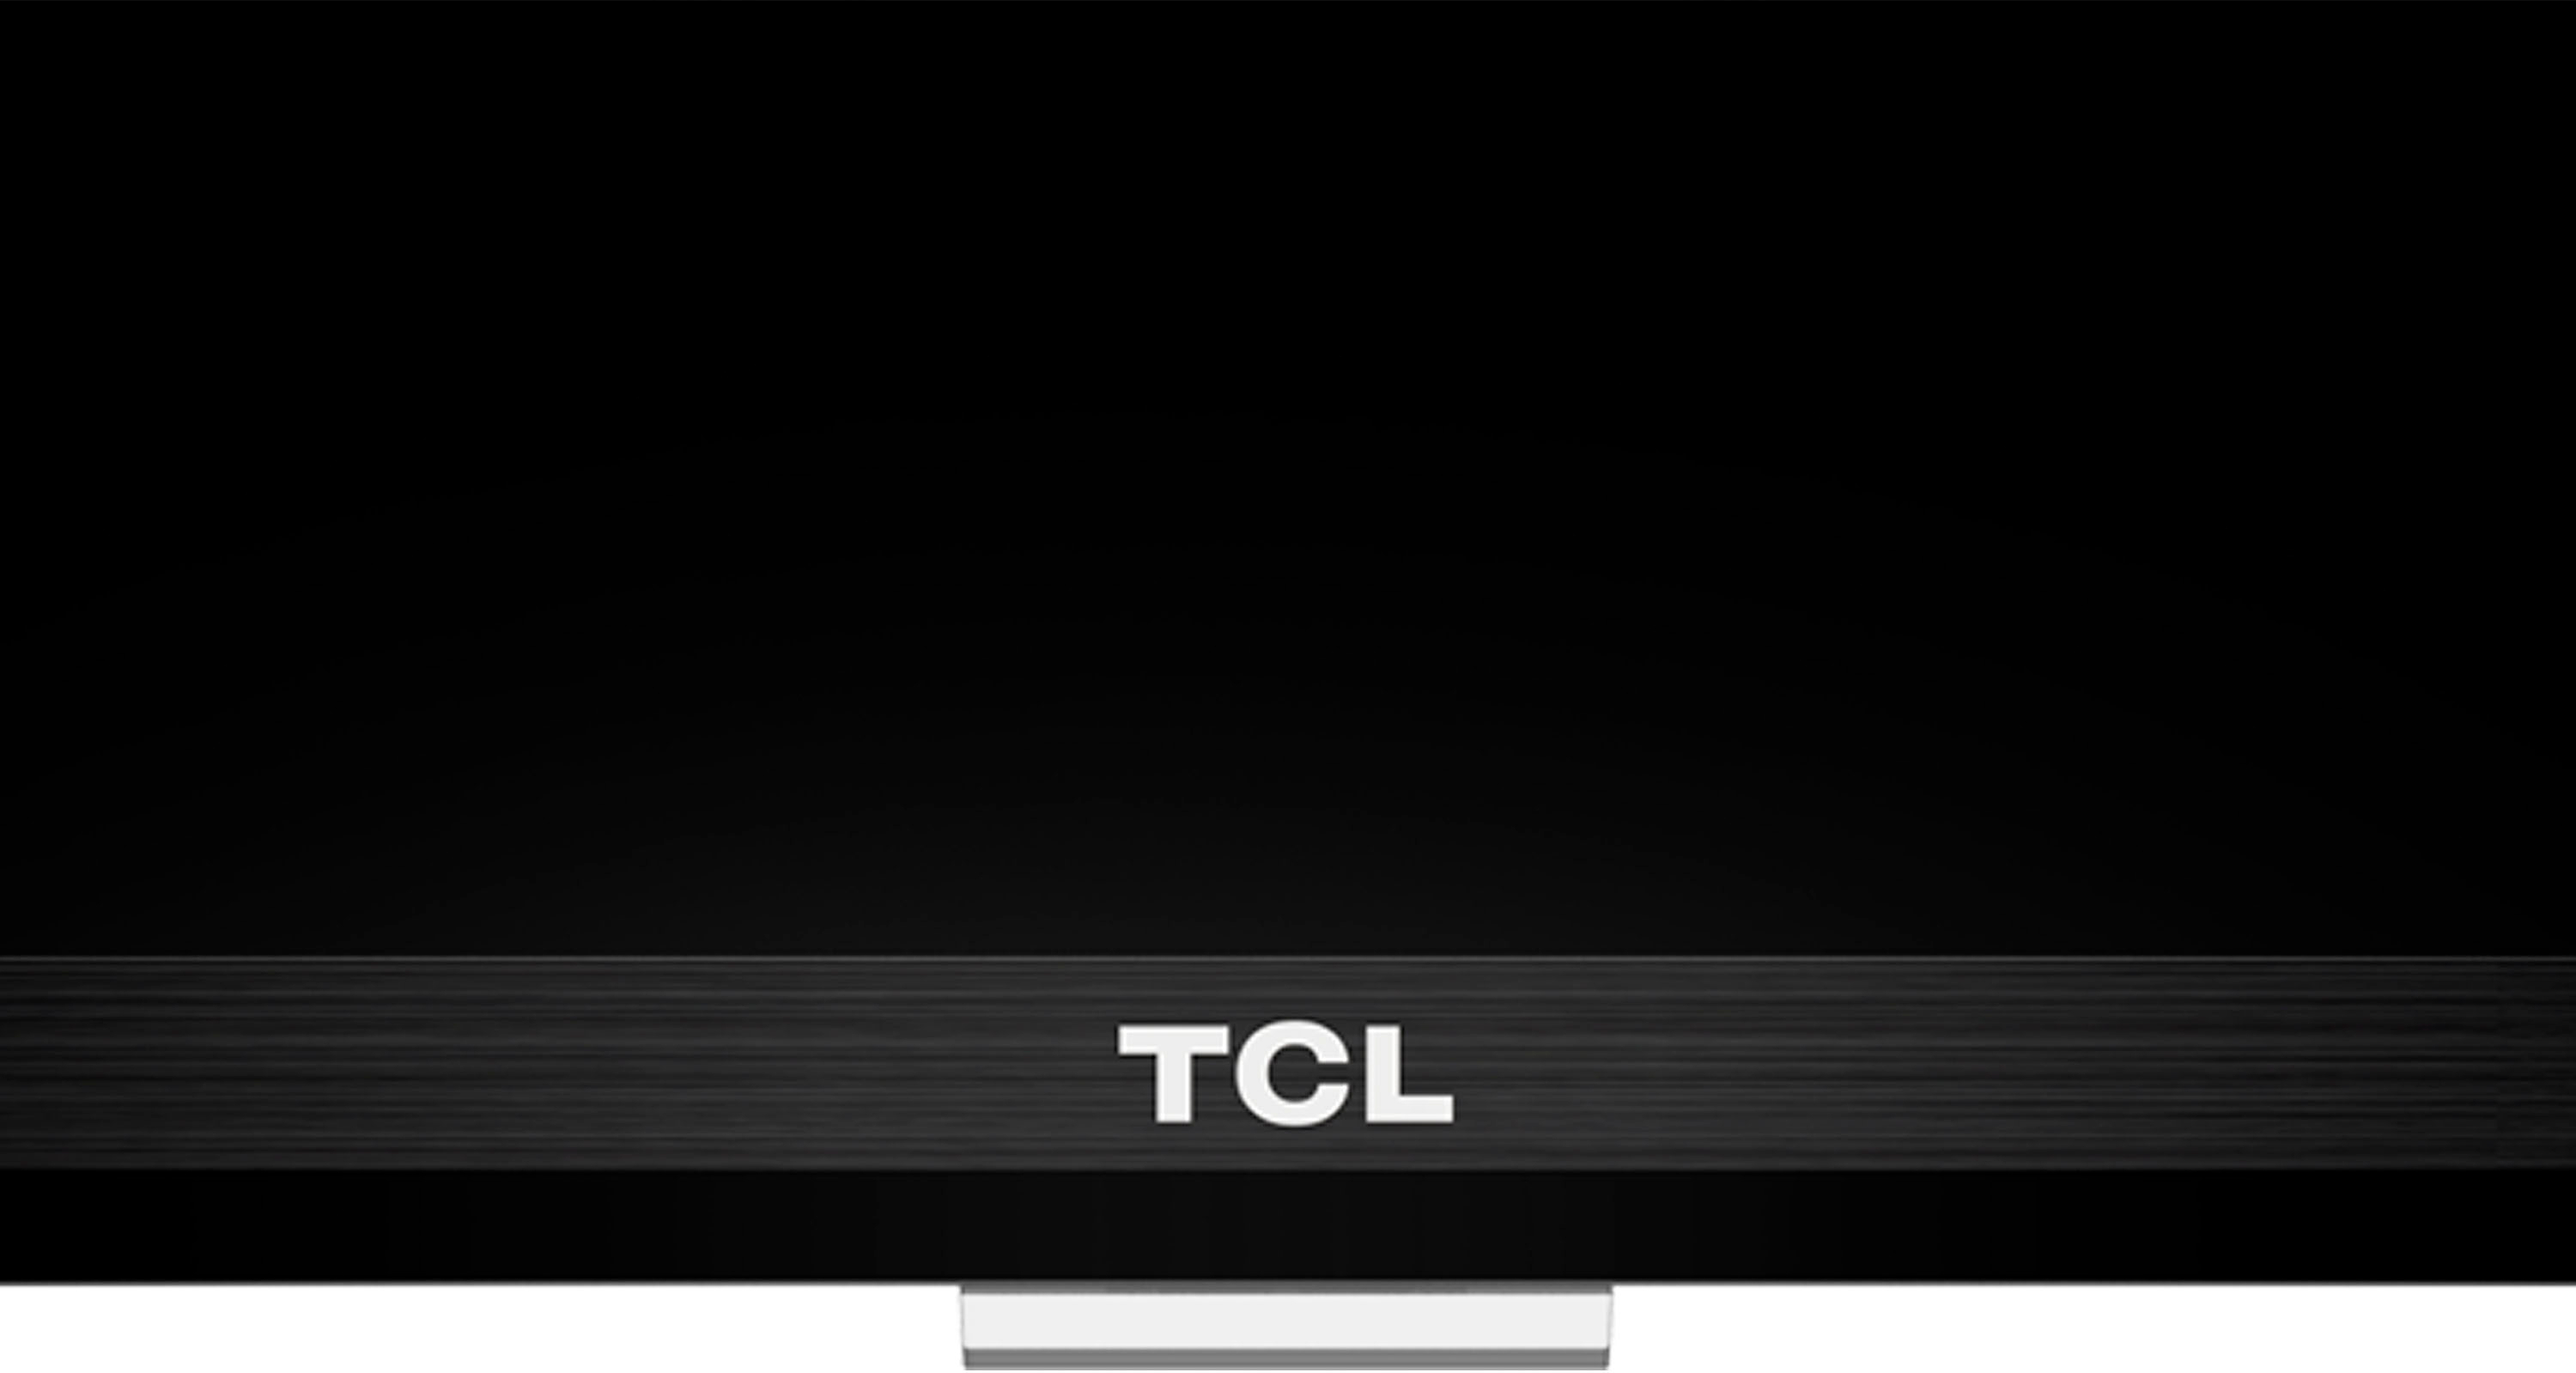 VideoSecu Soporte de pared inclinable para TV TCL de 40 pulgadas, 40FS3850,  40FS3800, 40FS3750, 40FD2700, 32S3850, 32S3850, 32S3850A, 32S3850B